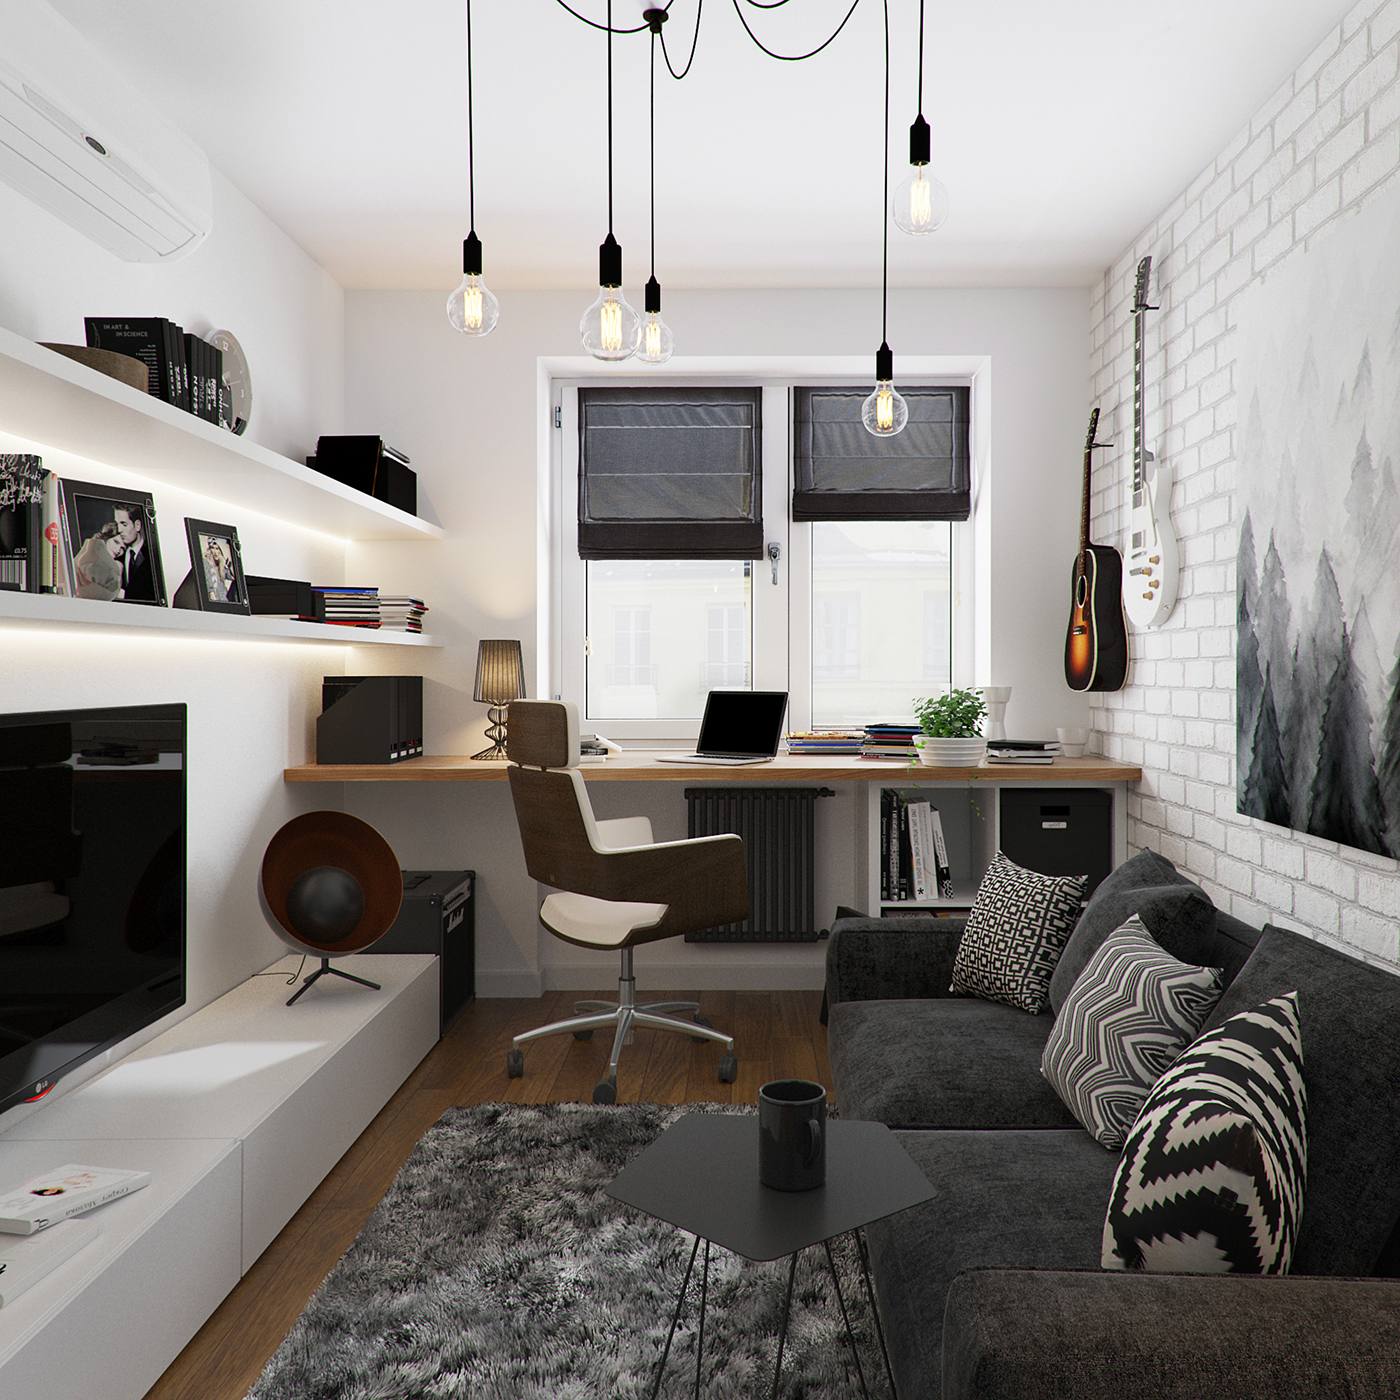 3ds max corona render  apartament Scandinavian style Interior Lviv Belgian town